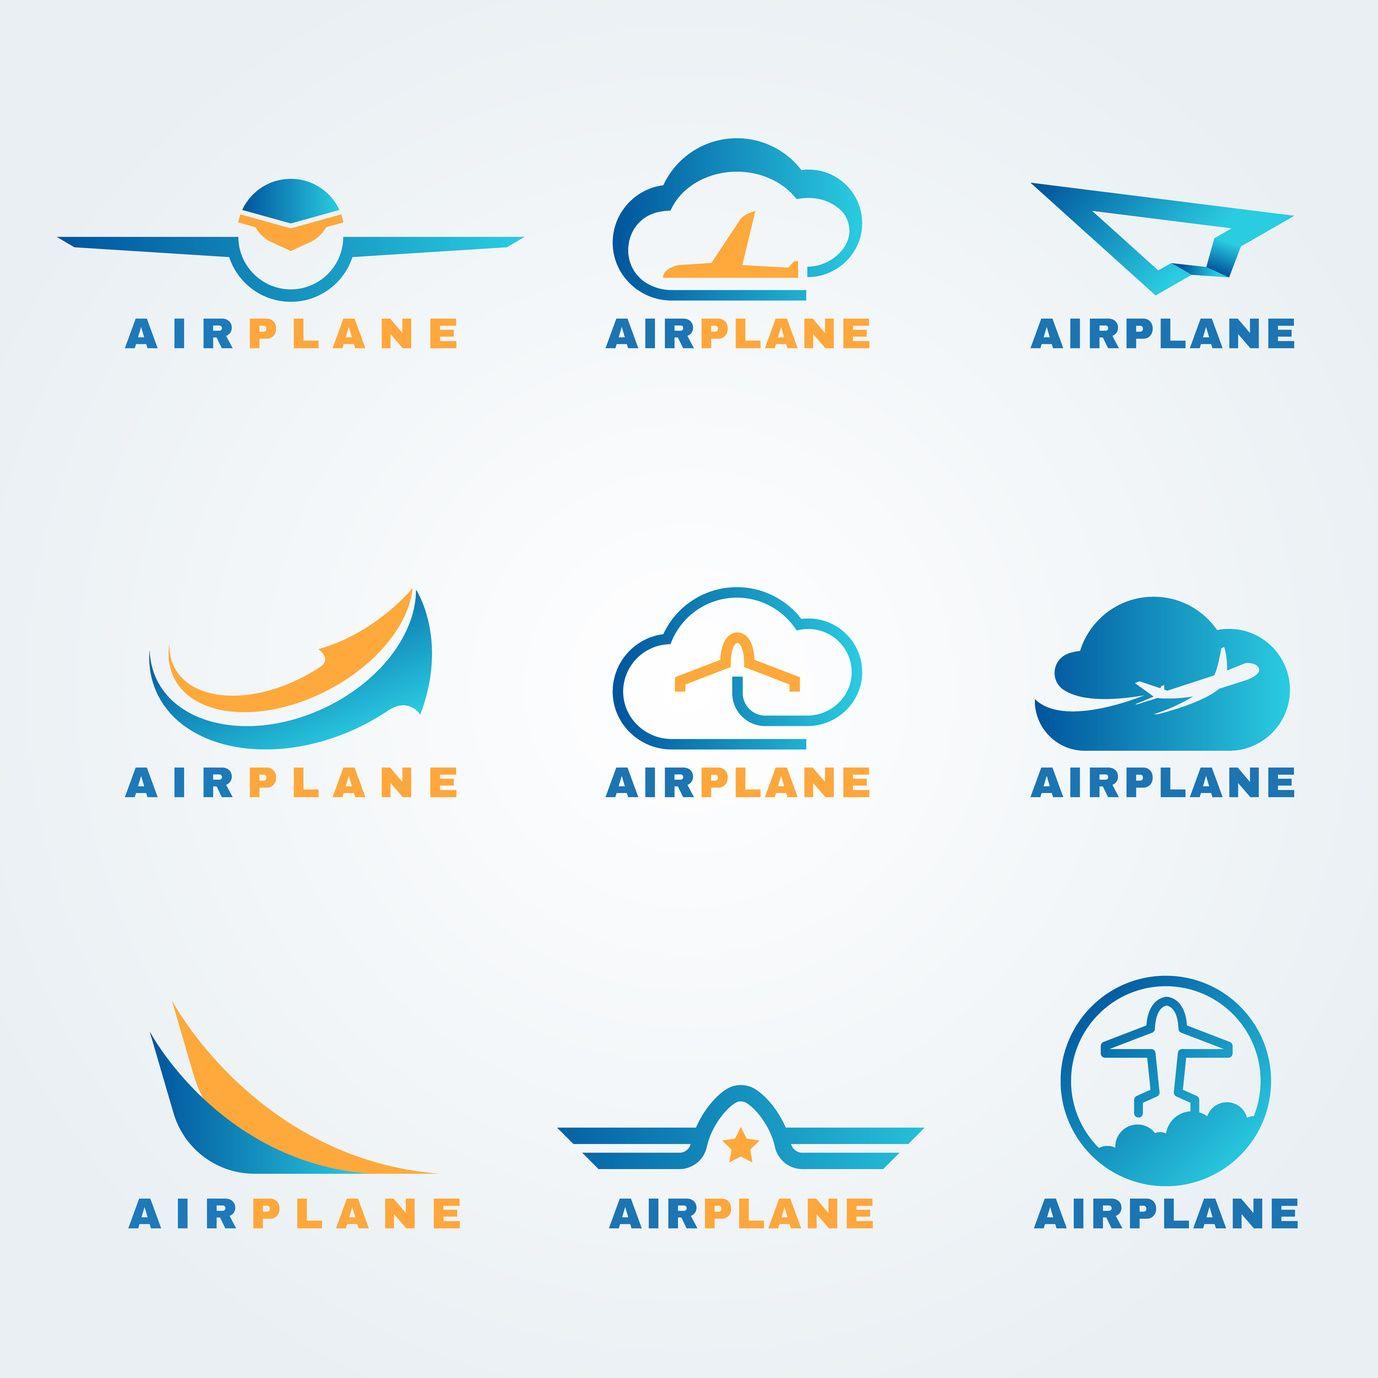 Airline Logo - Traits of an Unforgettable Airplane Logo Design